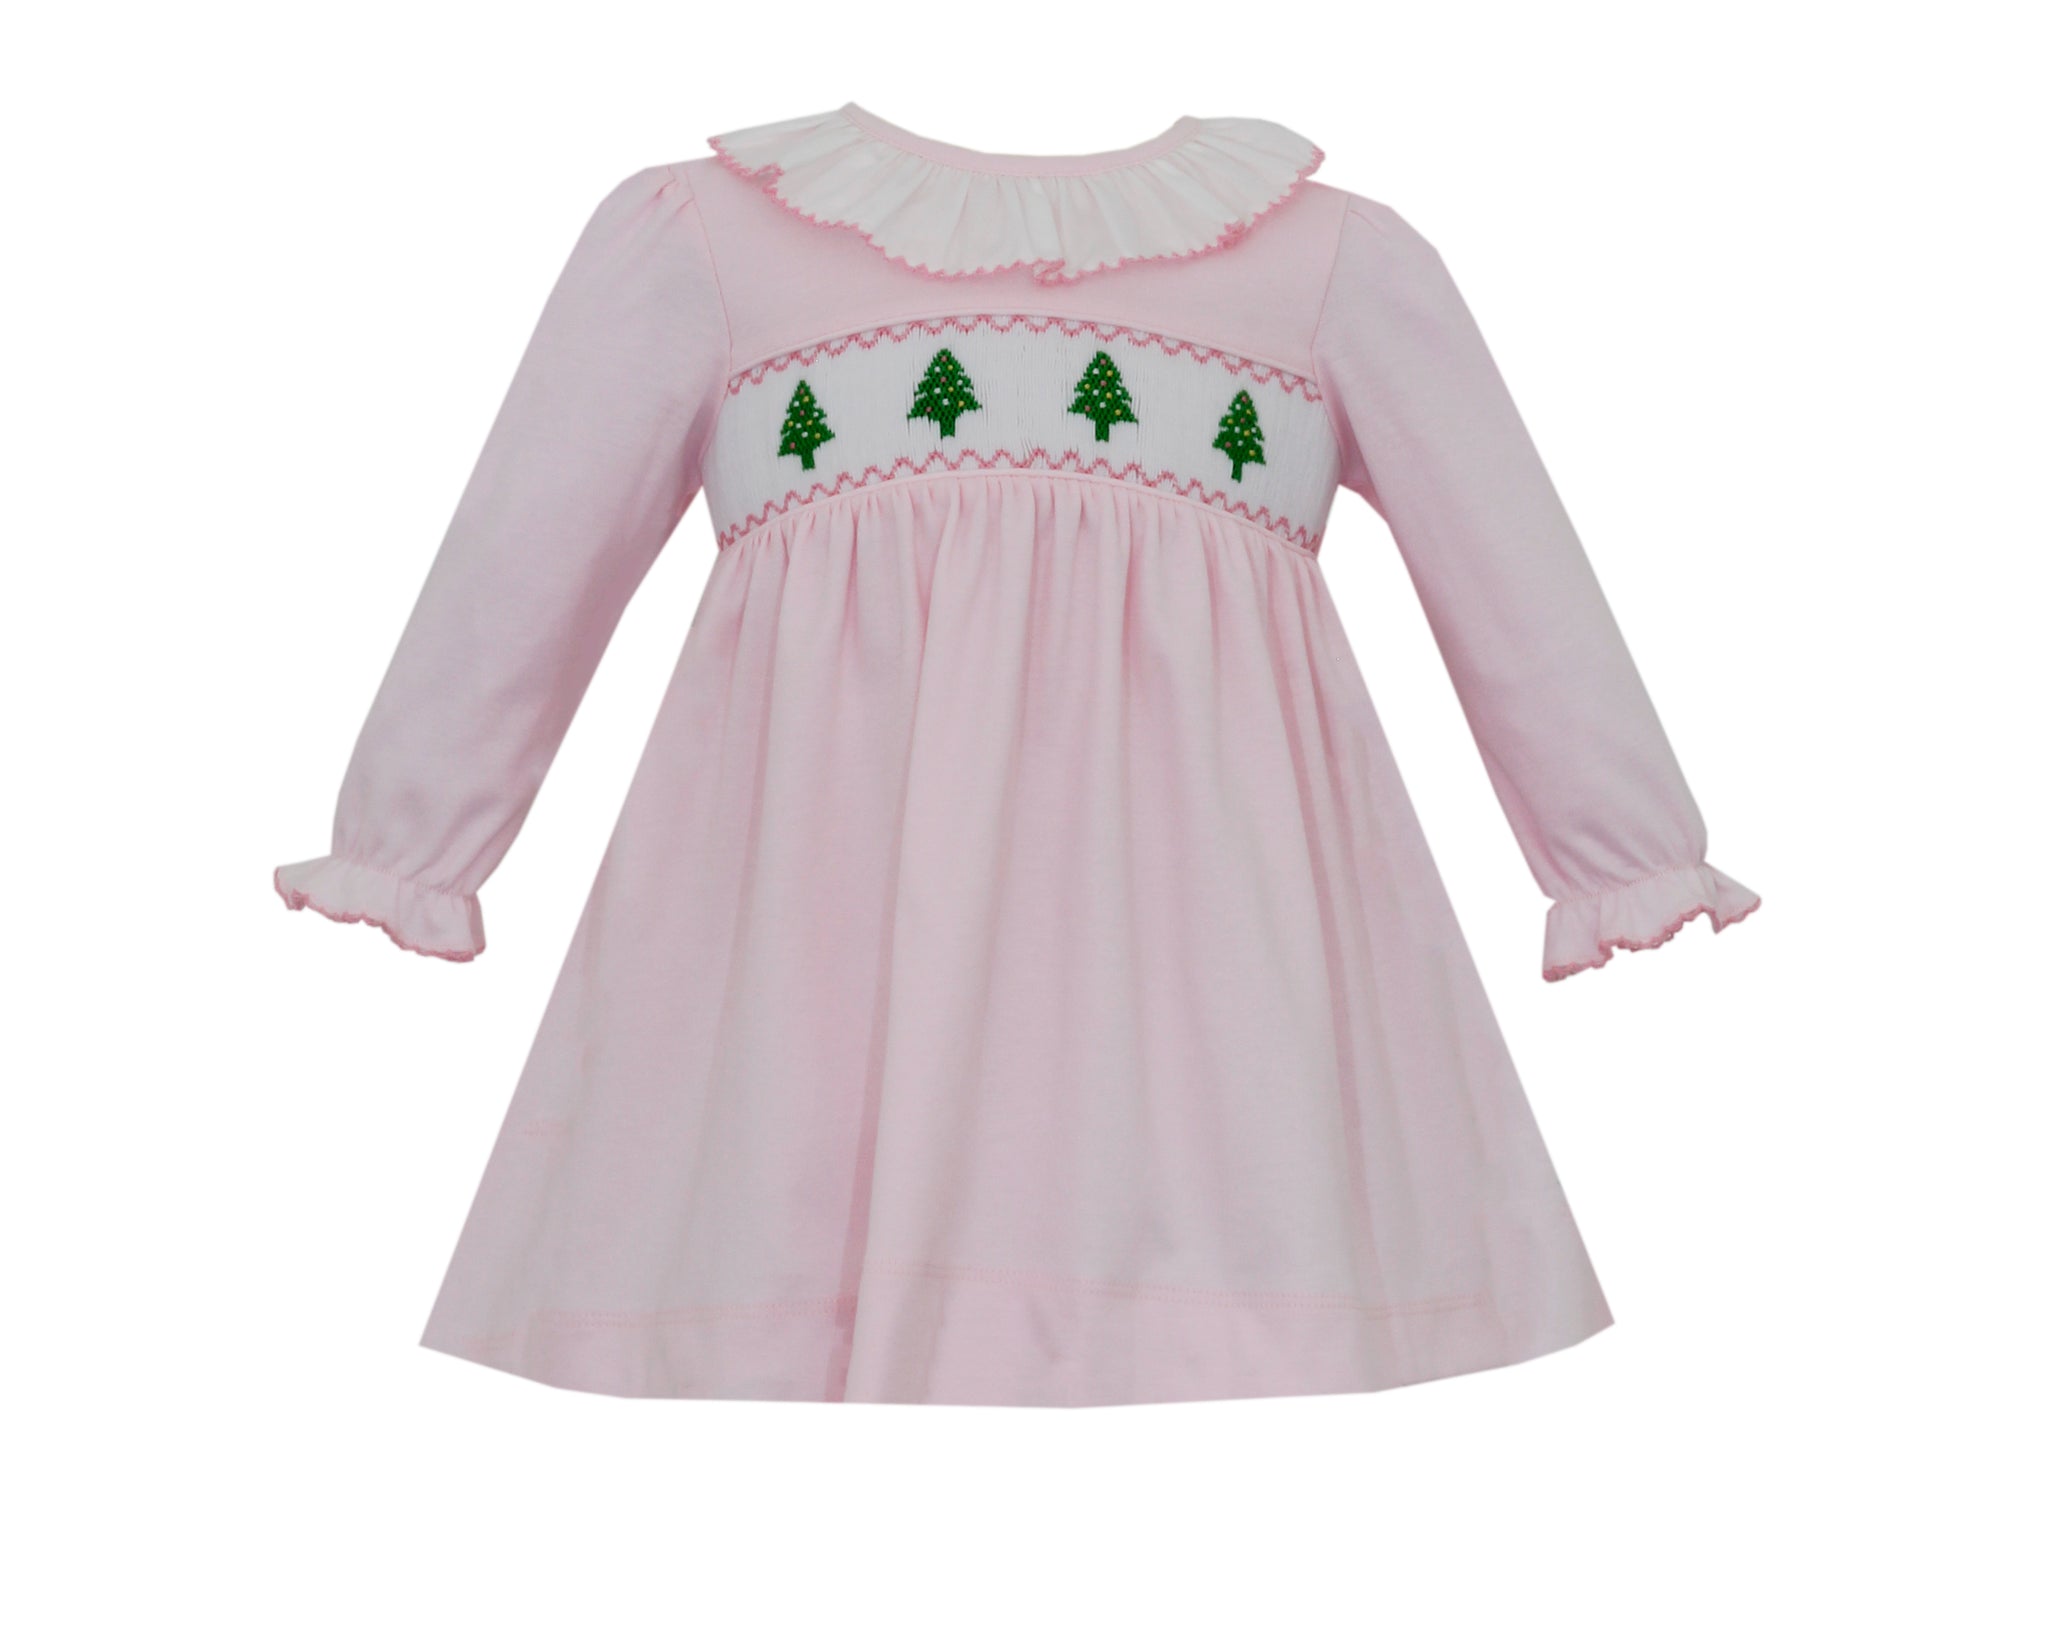 Pink Knit Dress w/ Smocked Trees